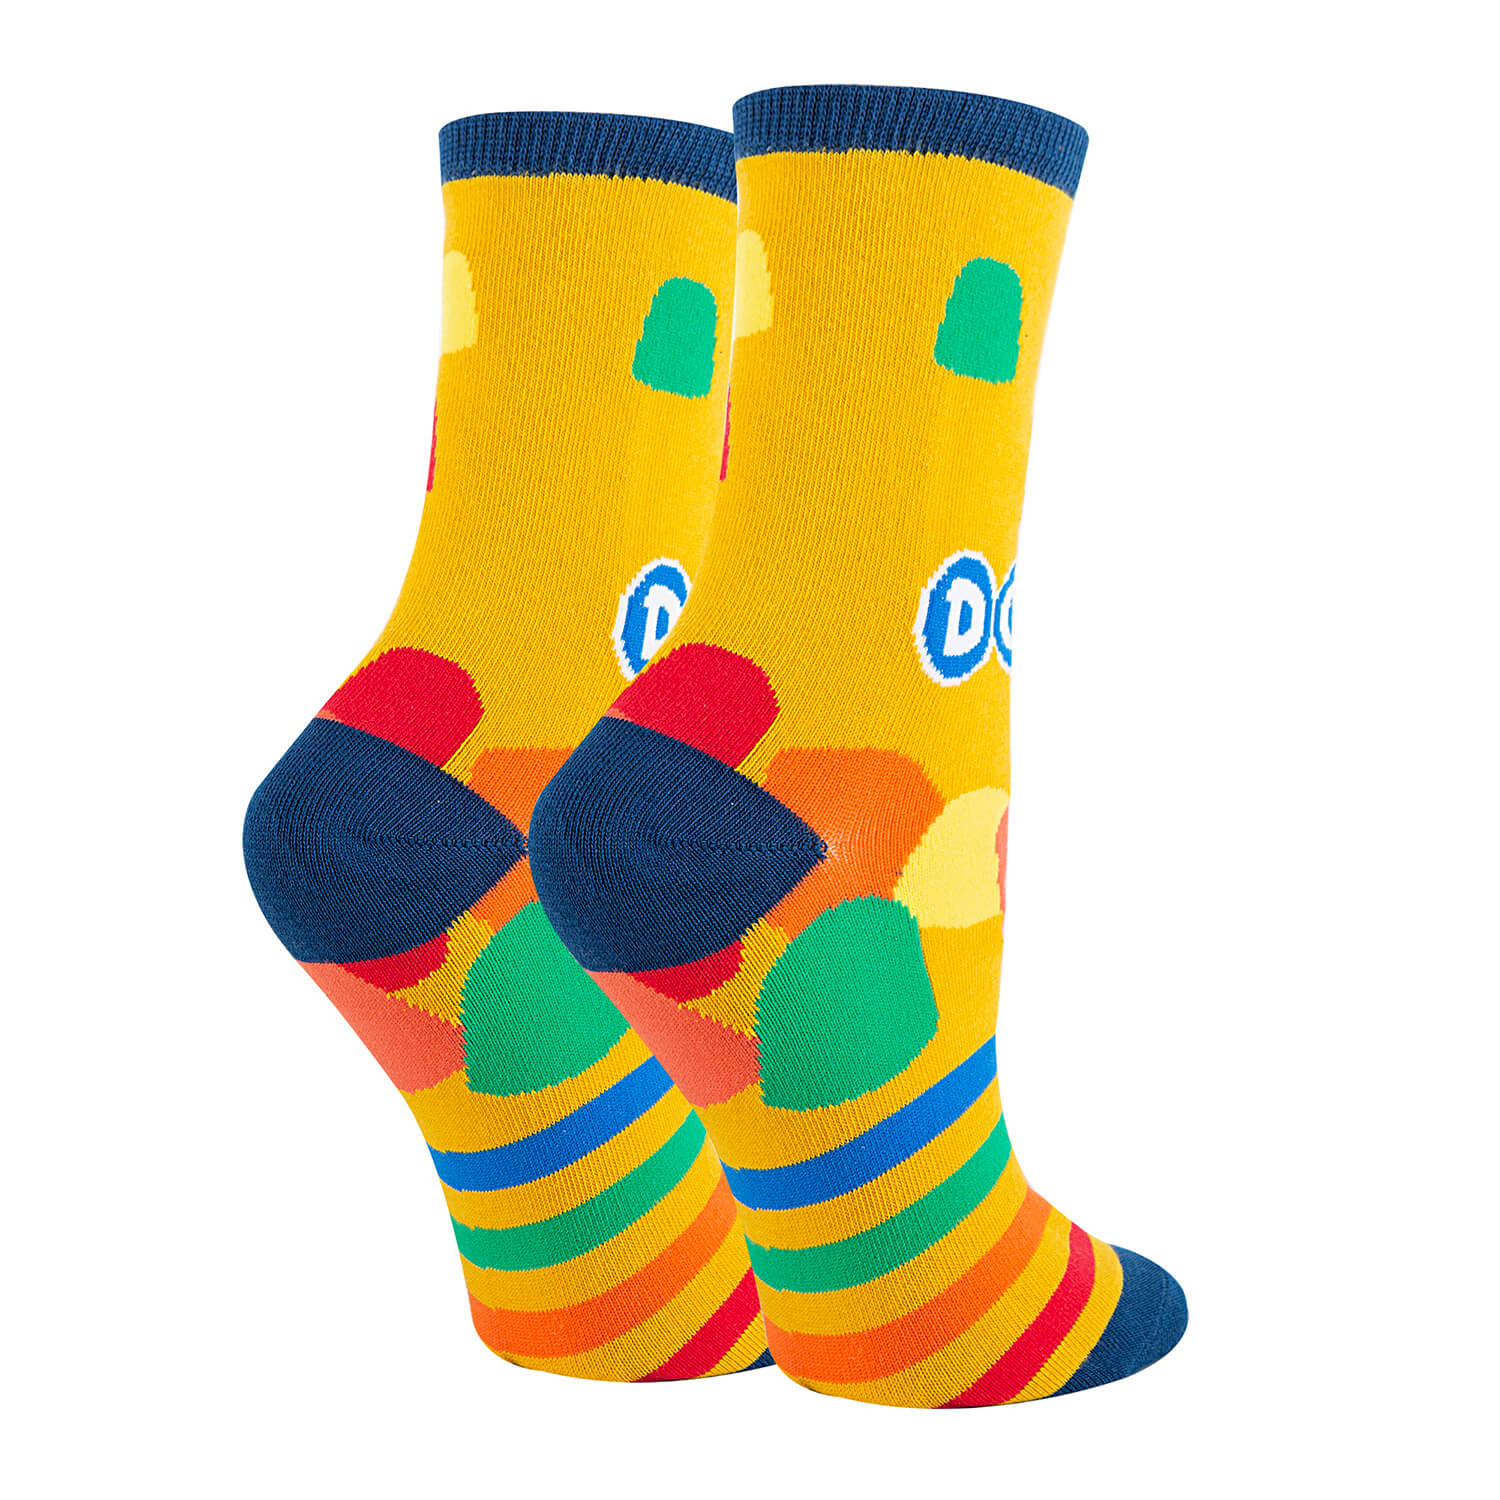 Tootsies Blue Women's Grippy Socks